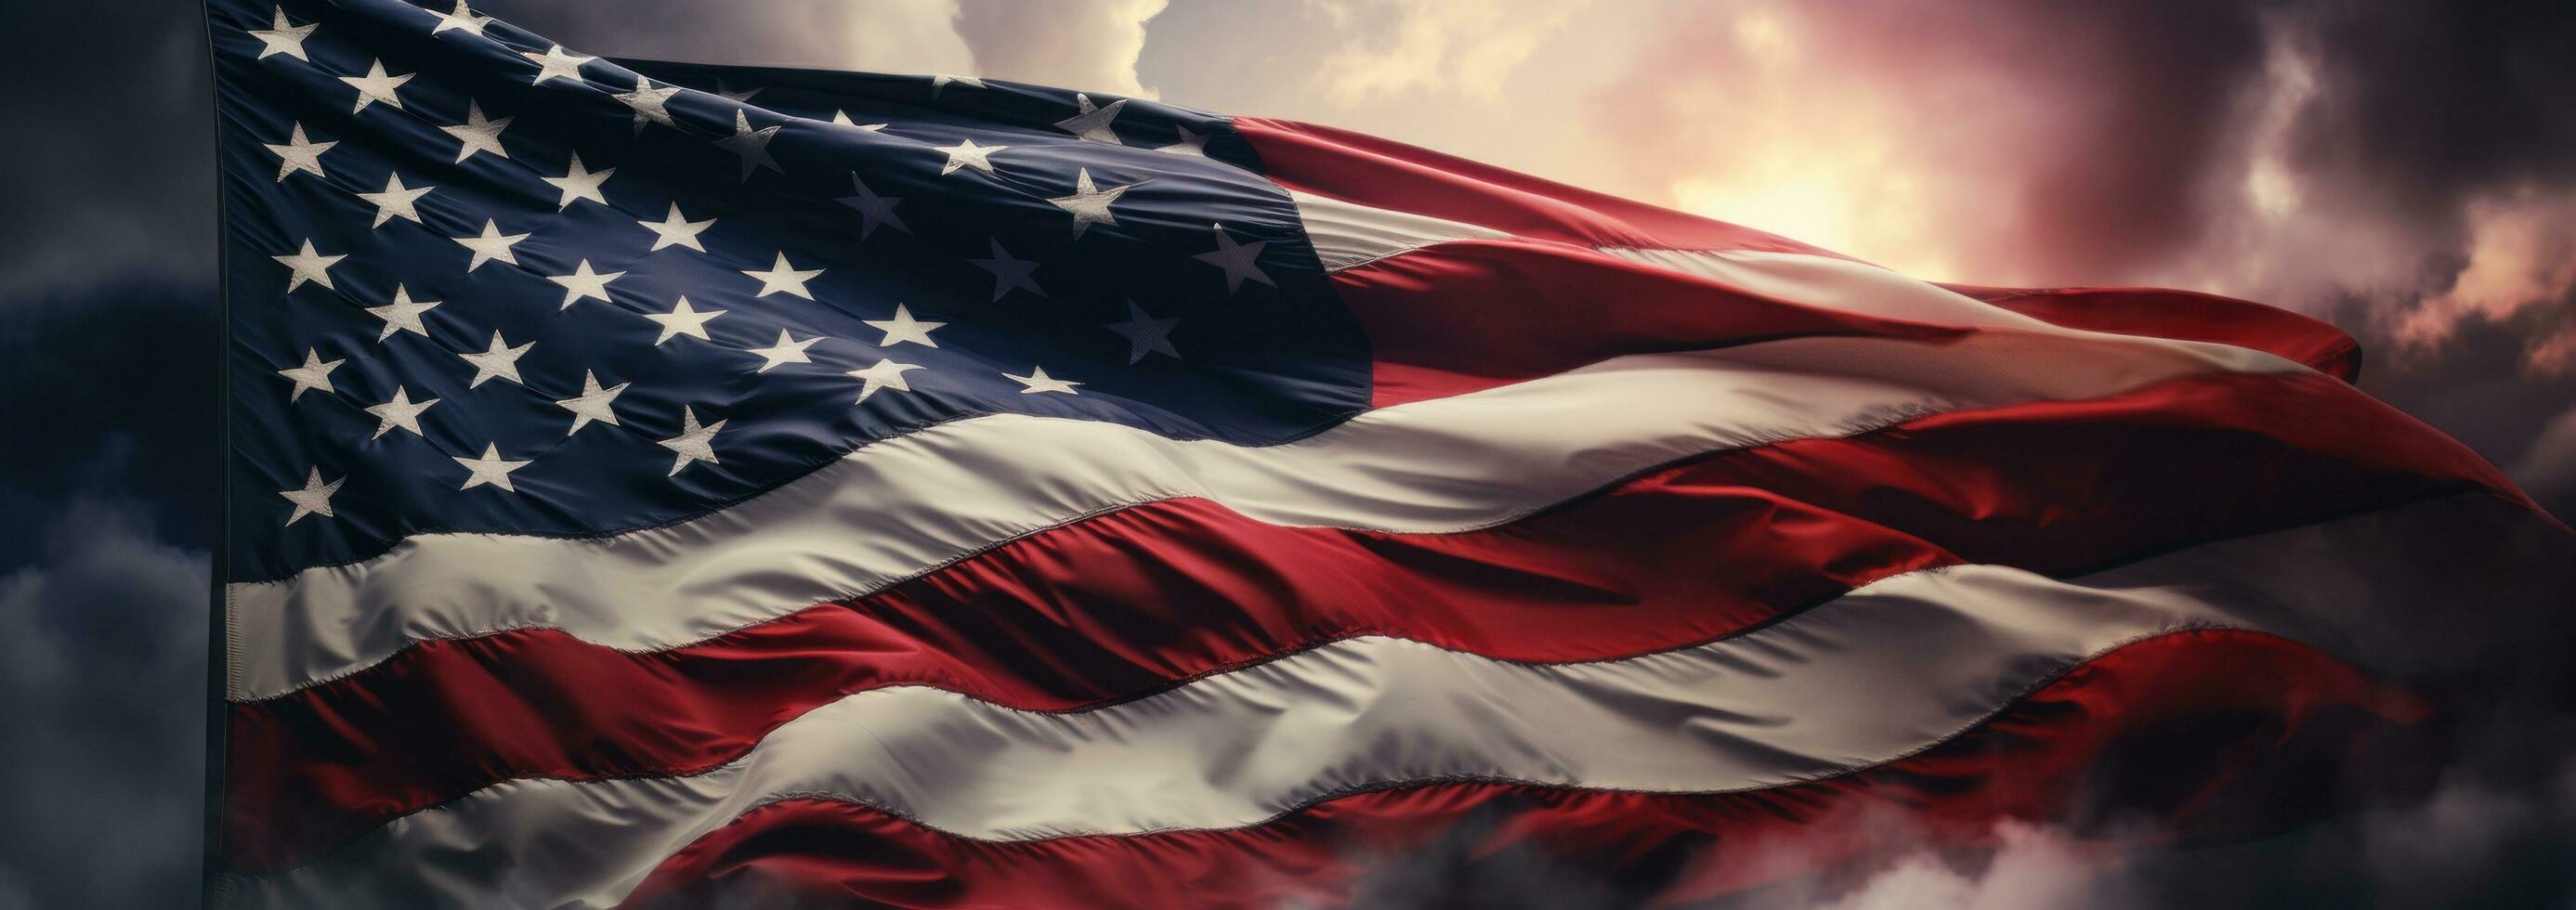 patriótico americano bandeiras contra borrado fundo foto